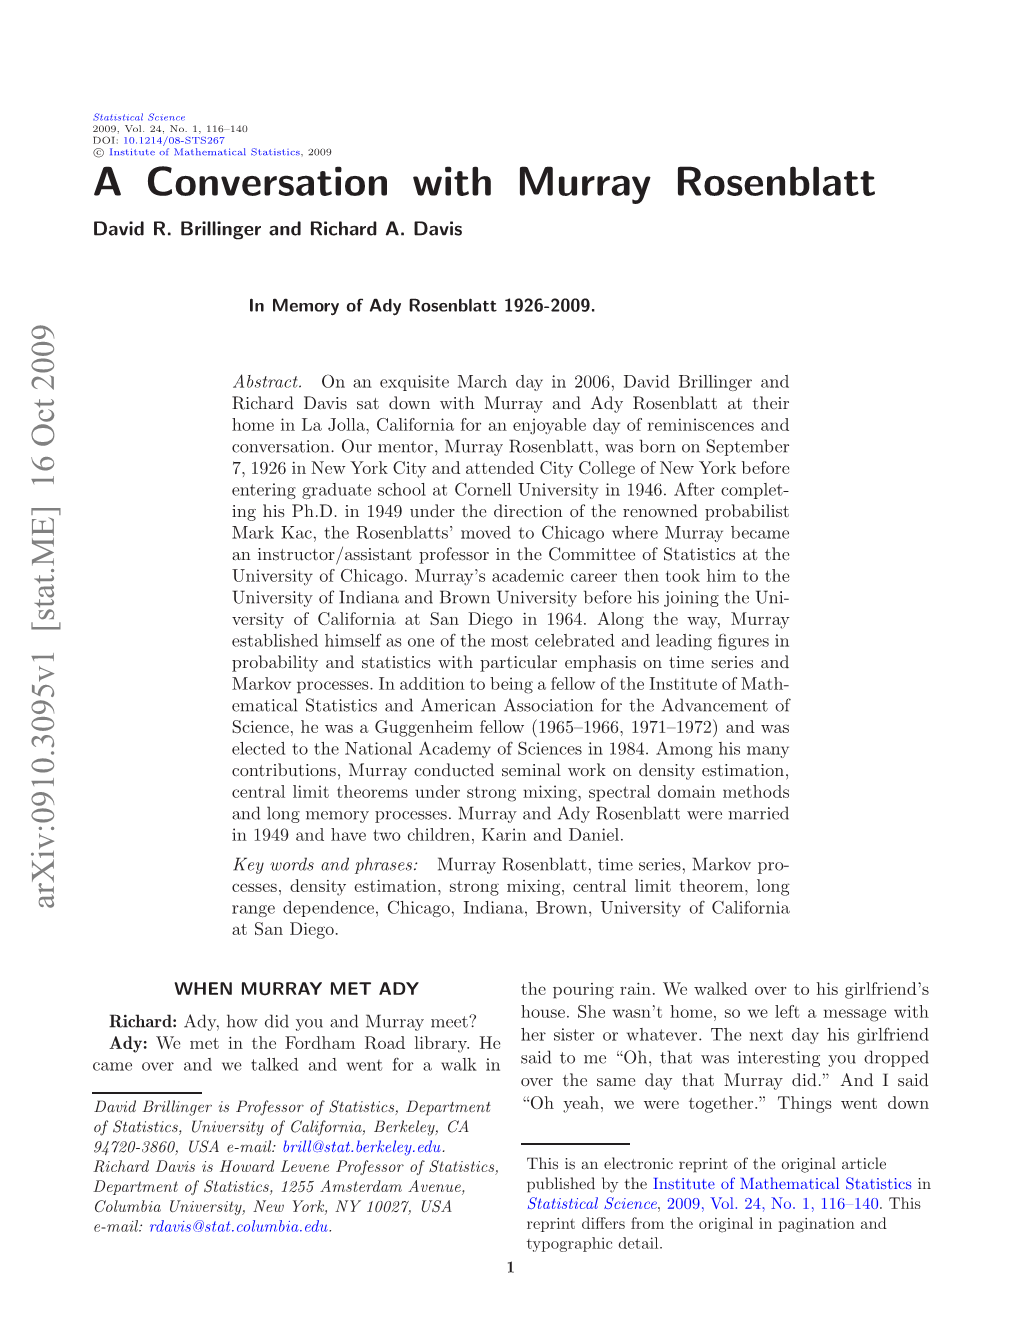 A Conversation with Murray Rosenblatt 3